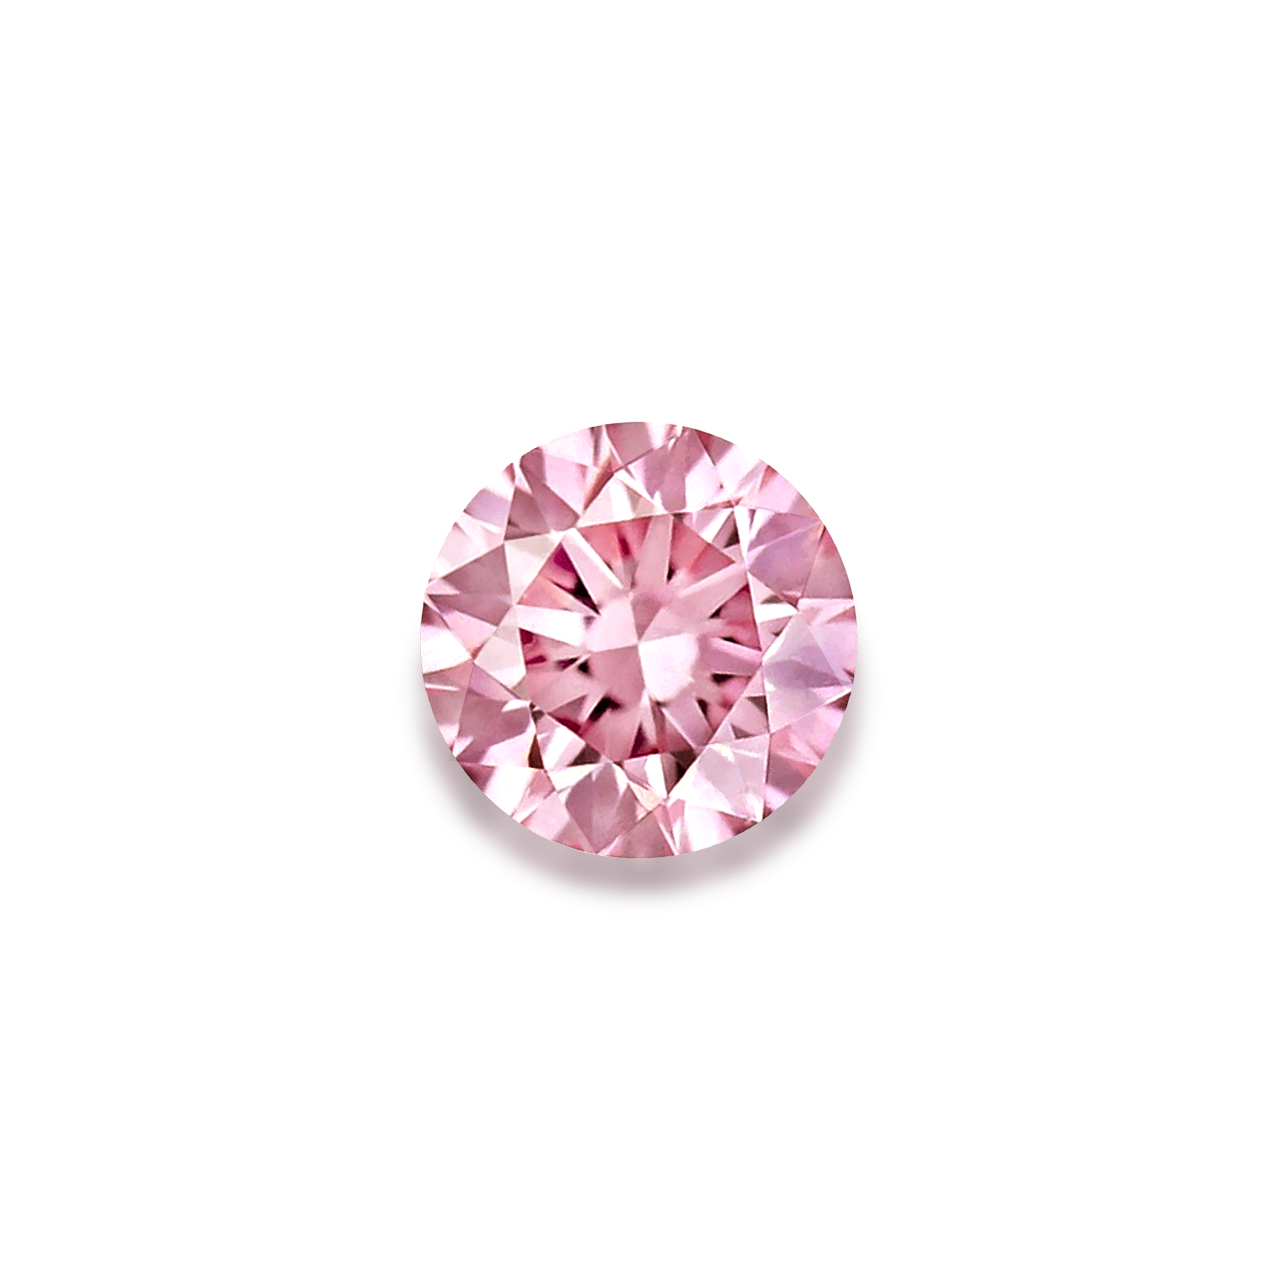 0.17克拉 粉鑽裸石
Unmounted Argyle Pink Colored Diamond